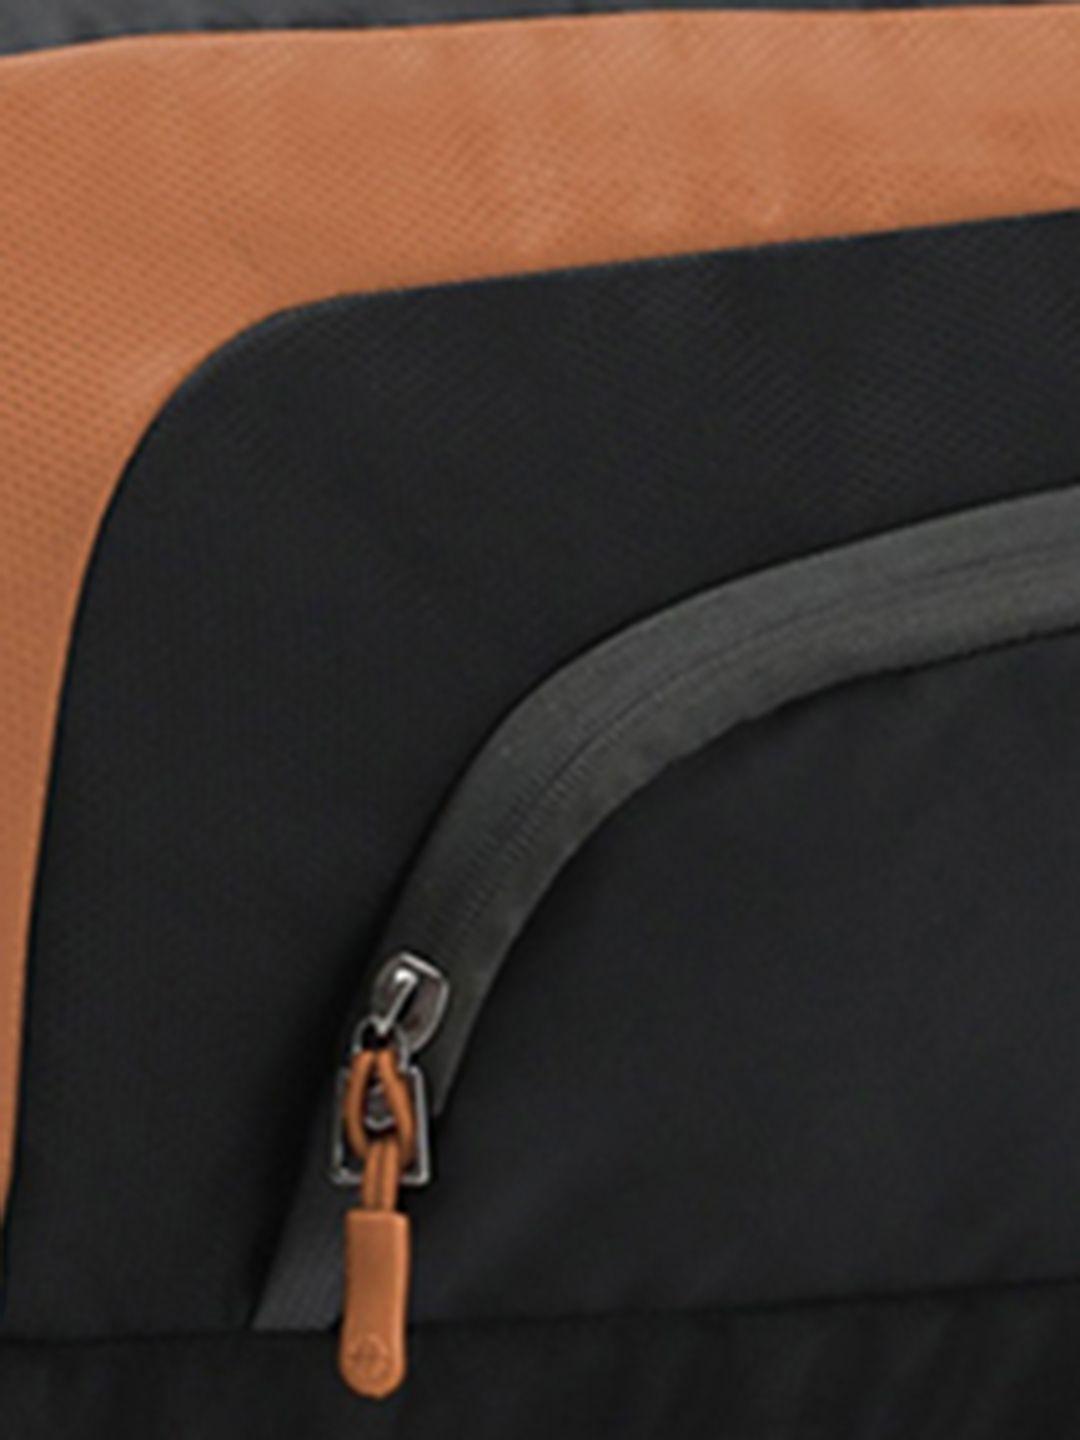 harissons black & orange colourblocked duffel bag